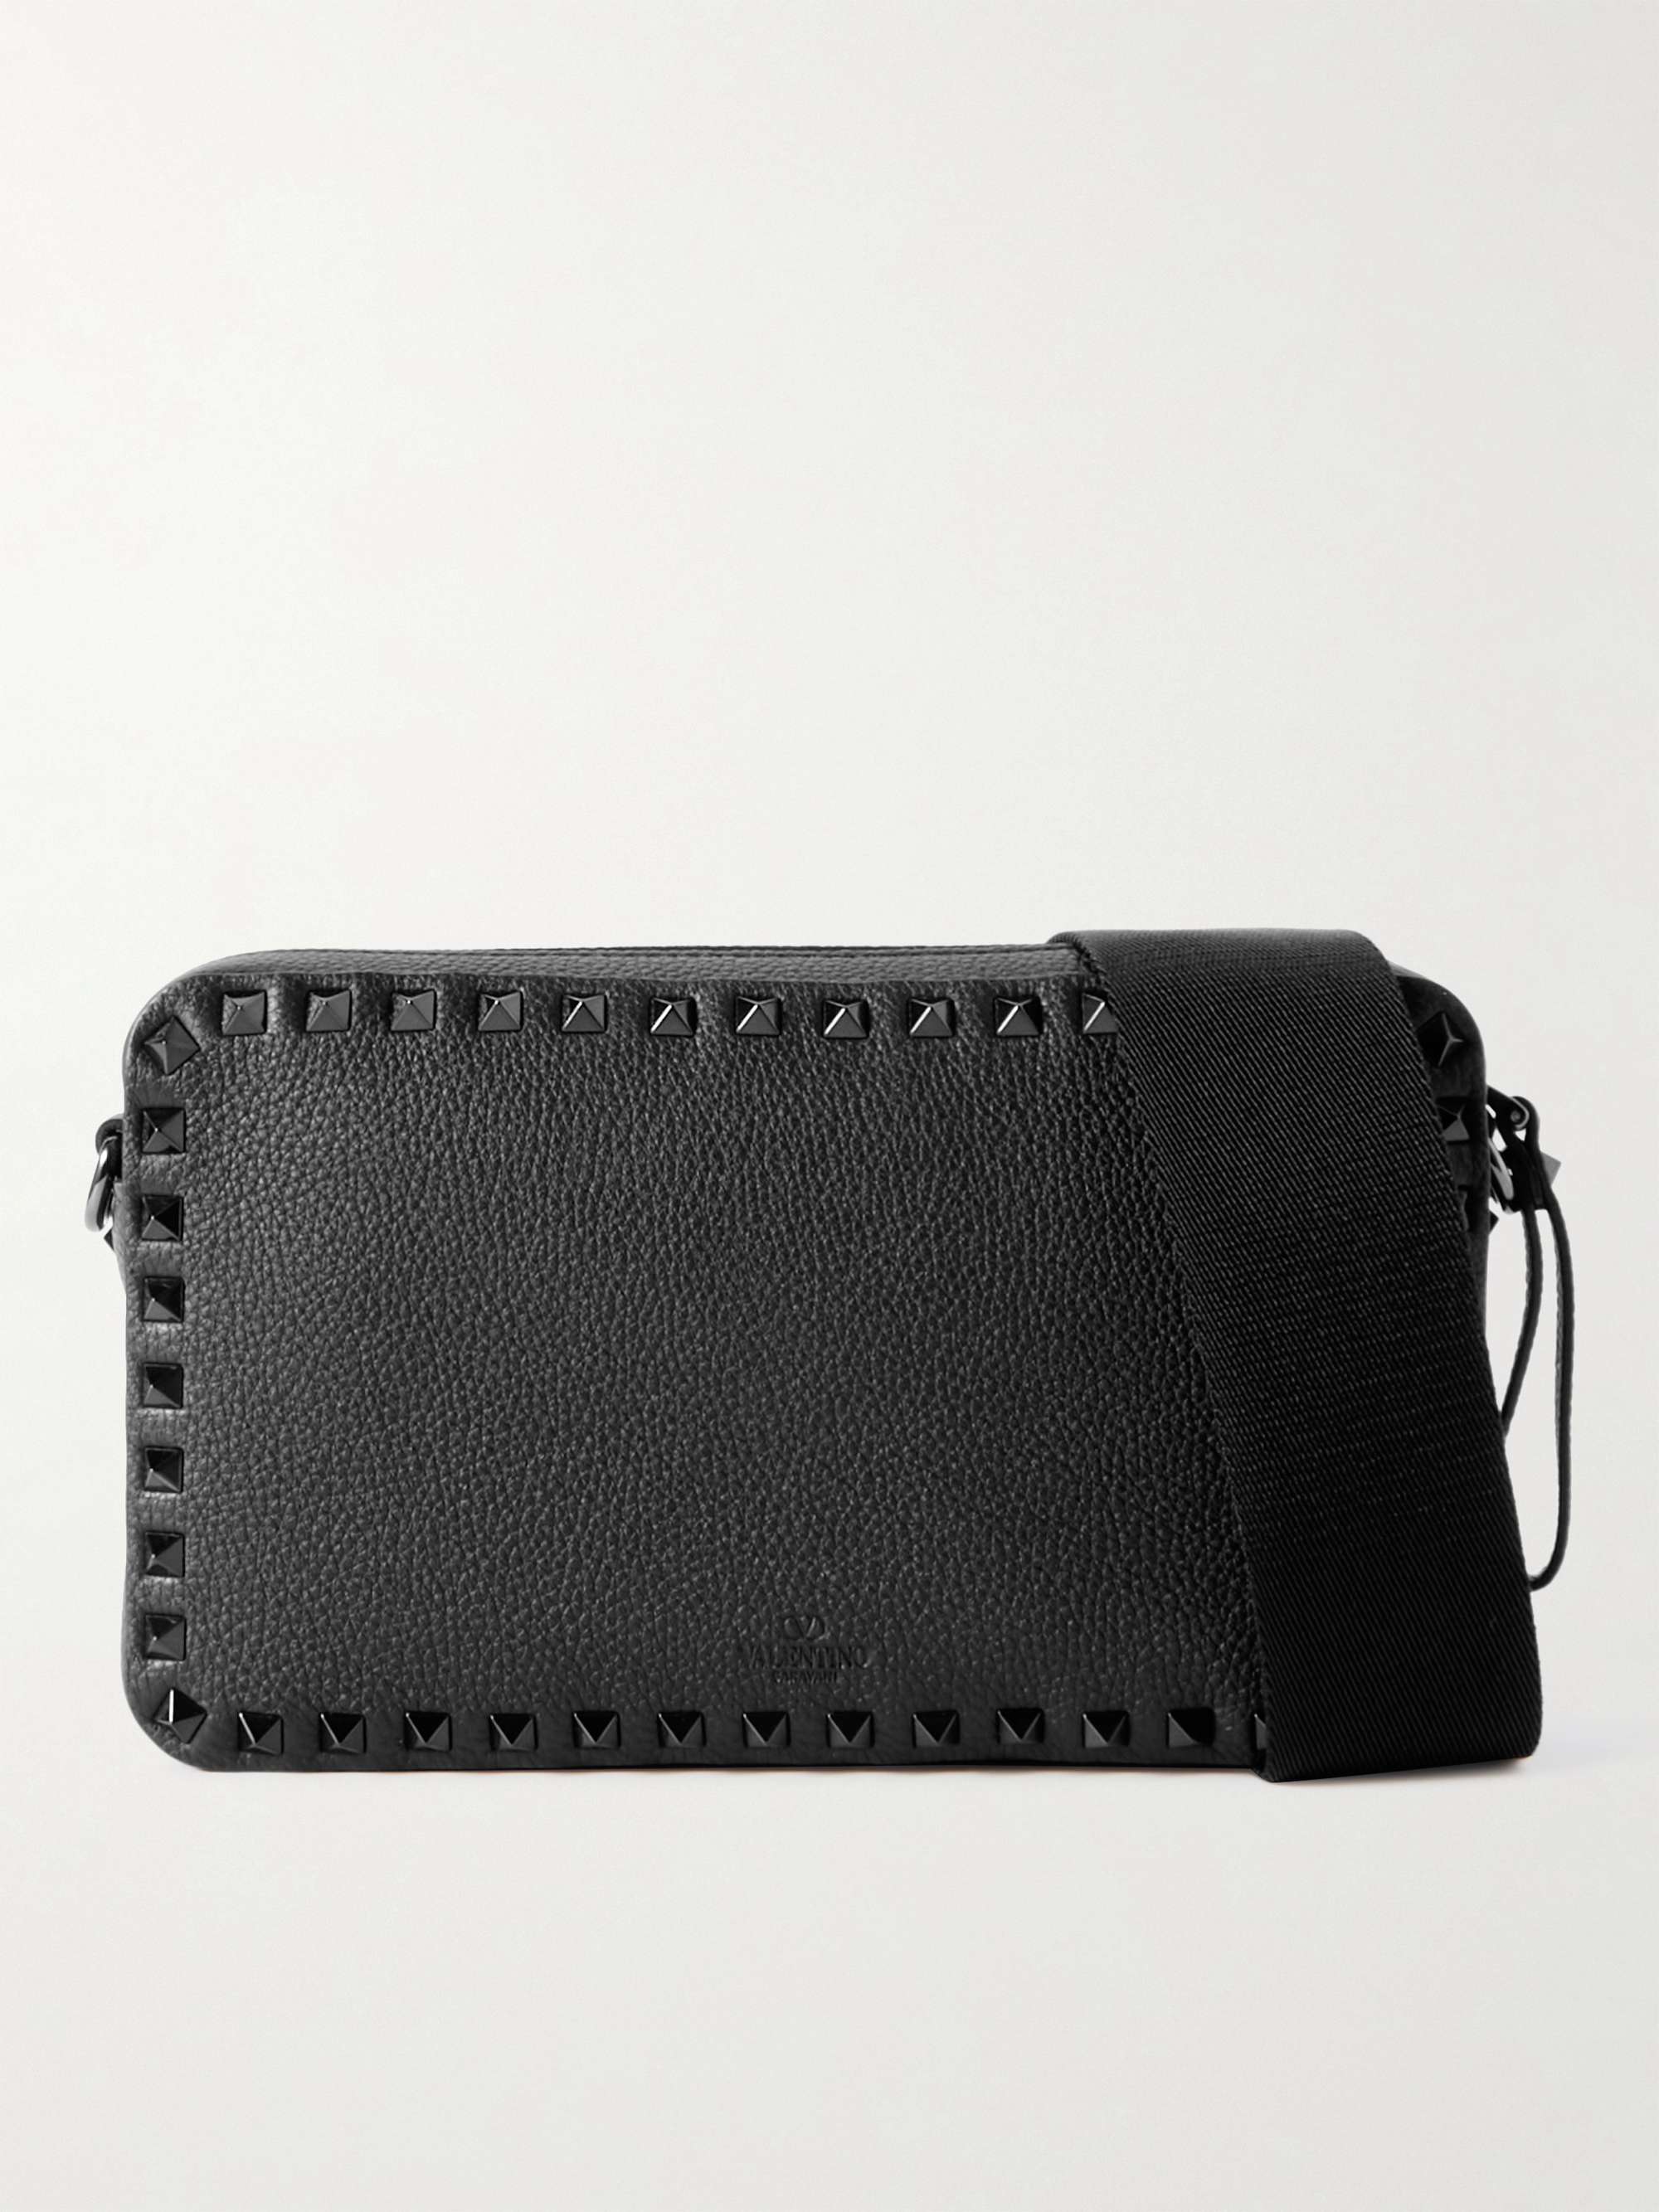 Rockstud Leather Crossbody Bag in Black - Valentino Garavani